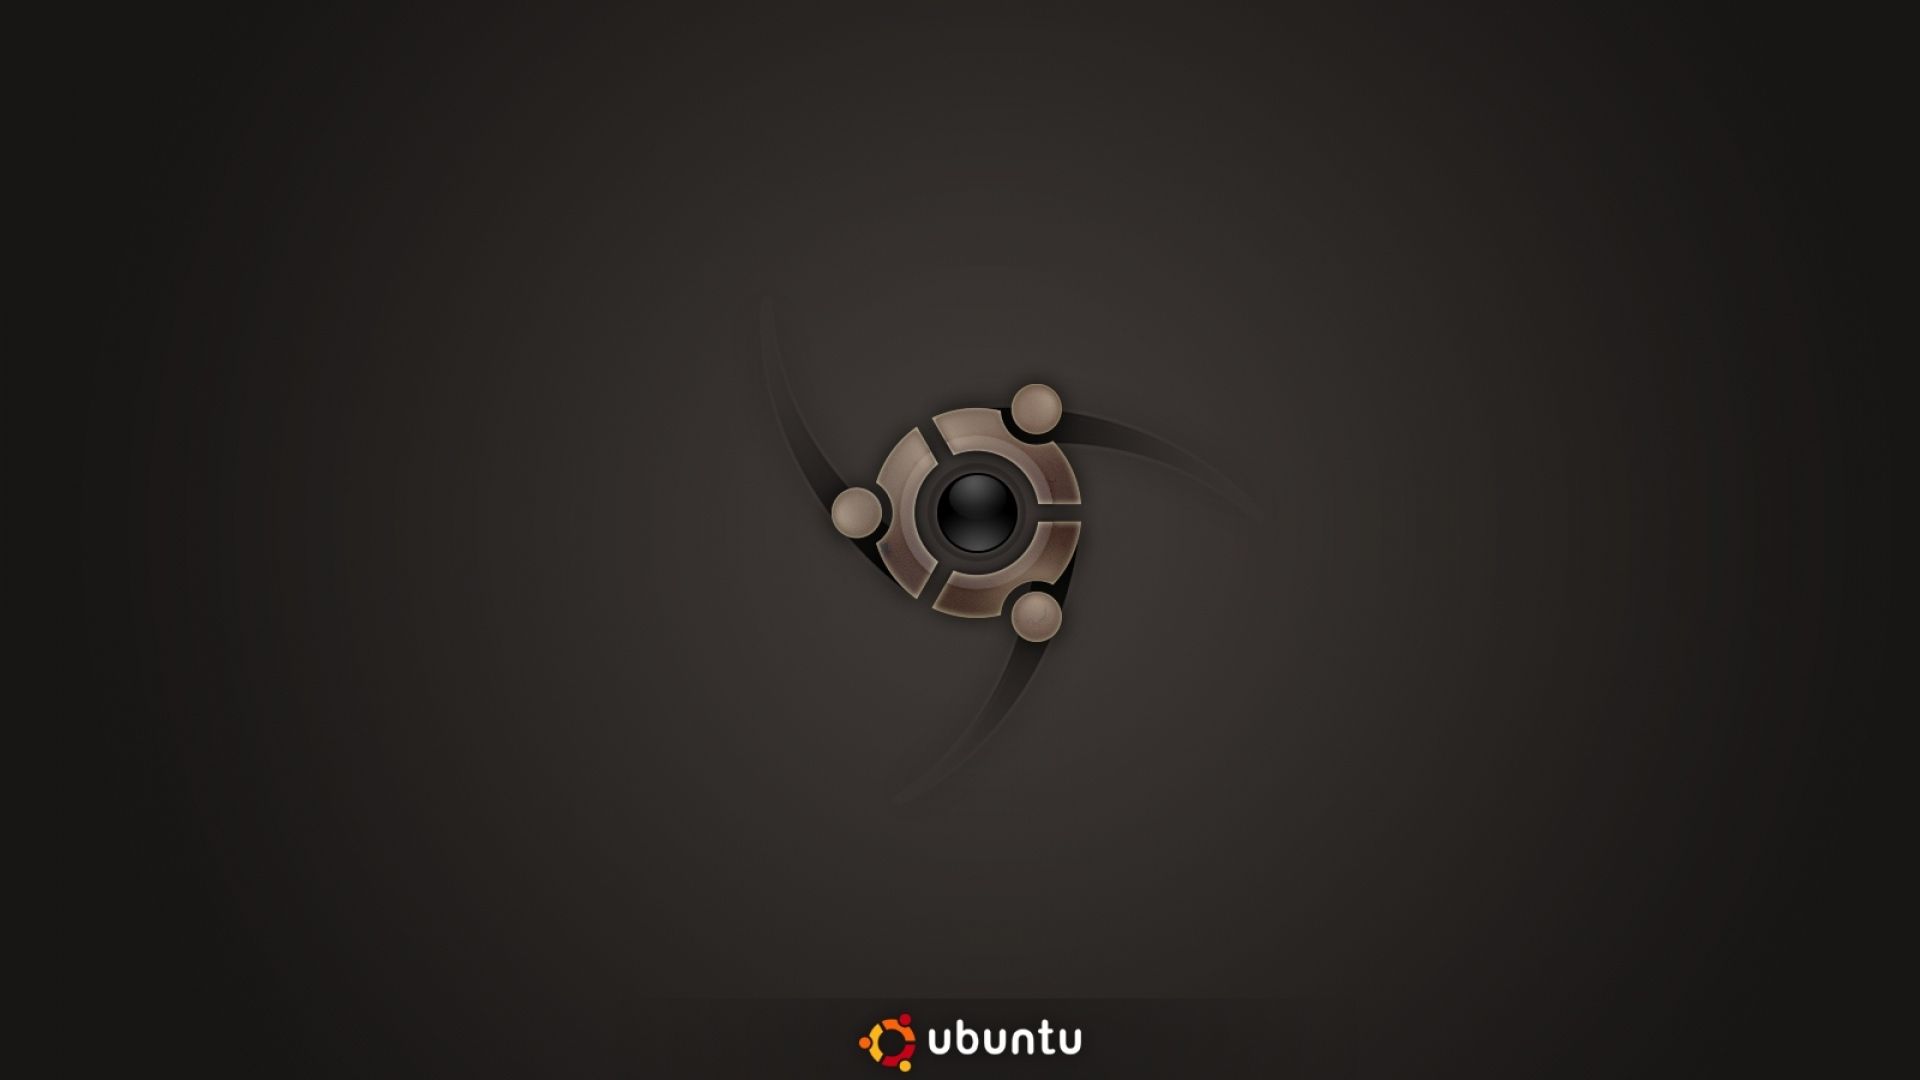 Ubuntu Wallpaper Hd